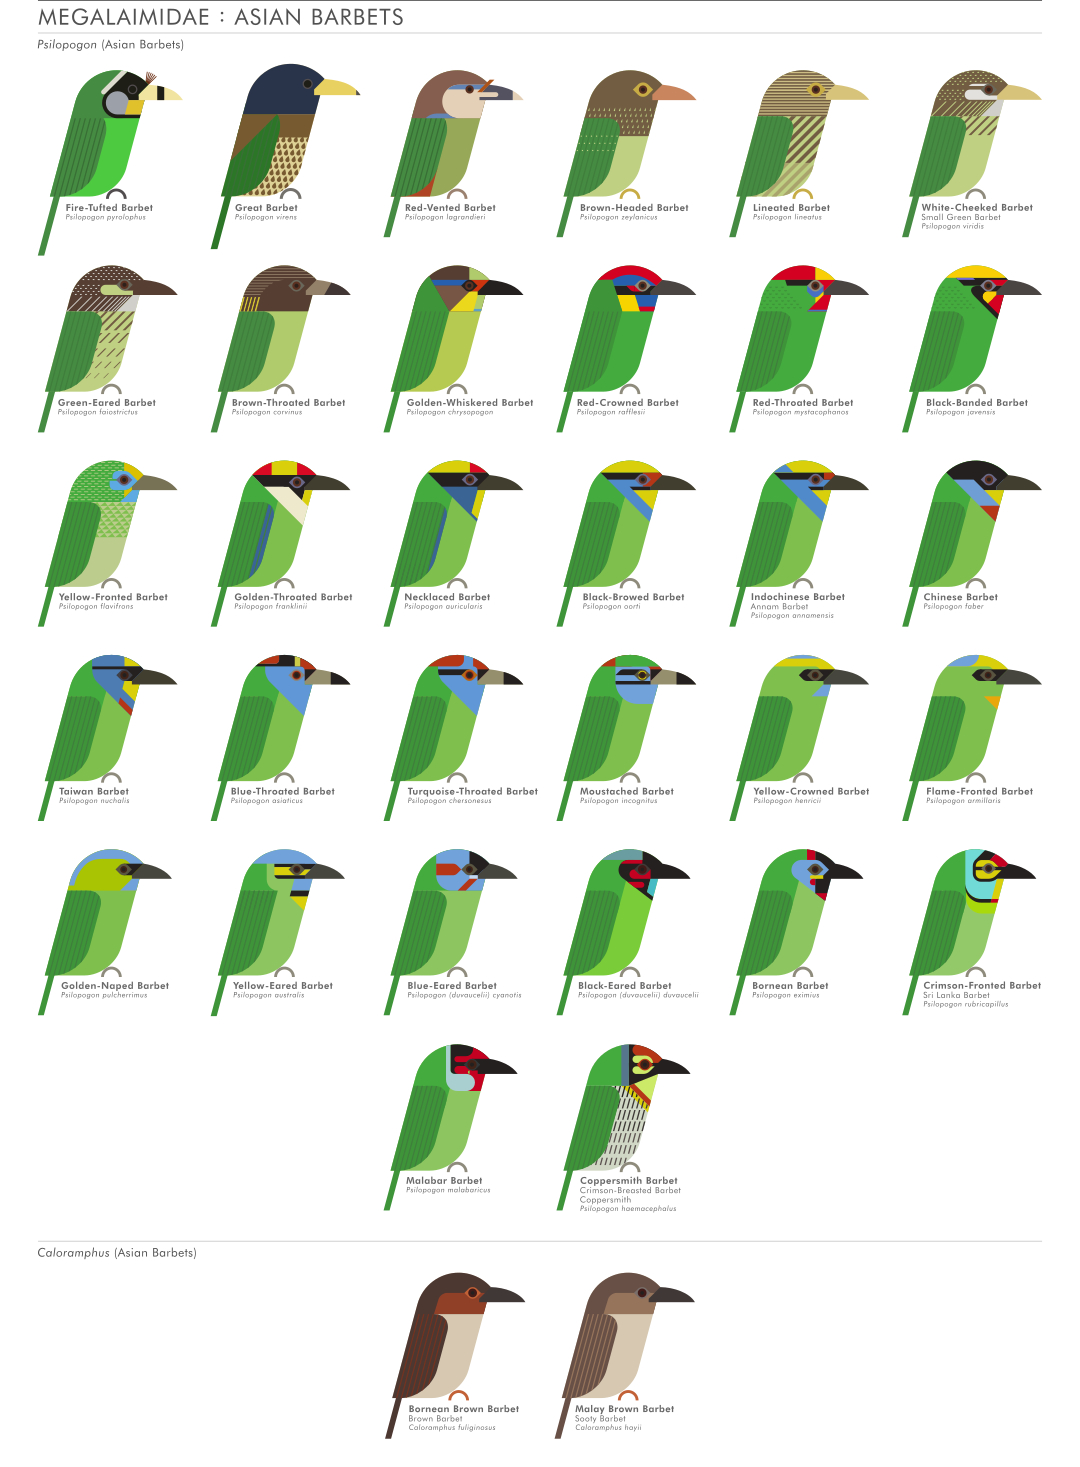 scott partridge - ave - avian vector encyclopedia - asian barbets megalaimidae piciformes - vector bird art